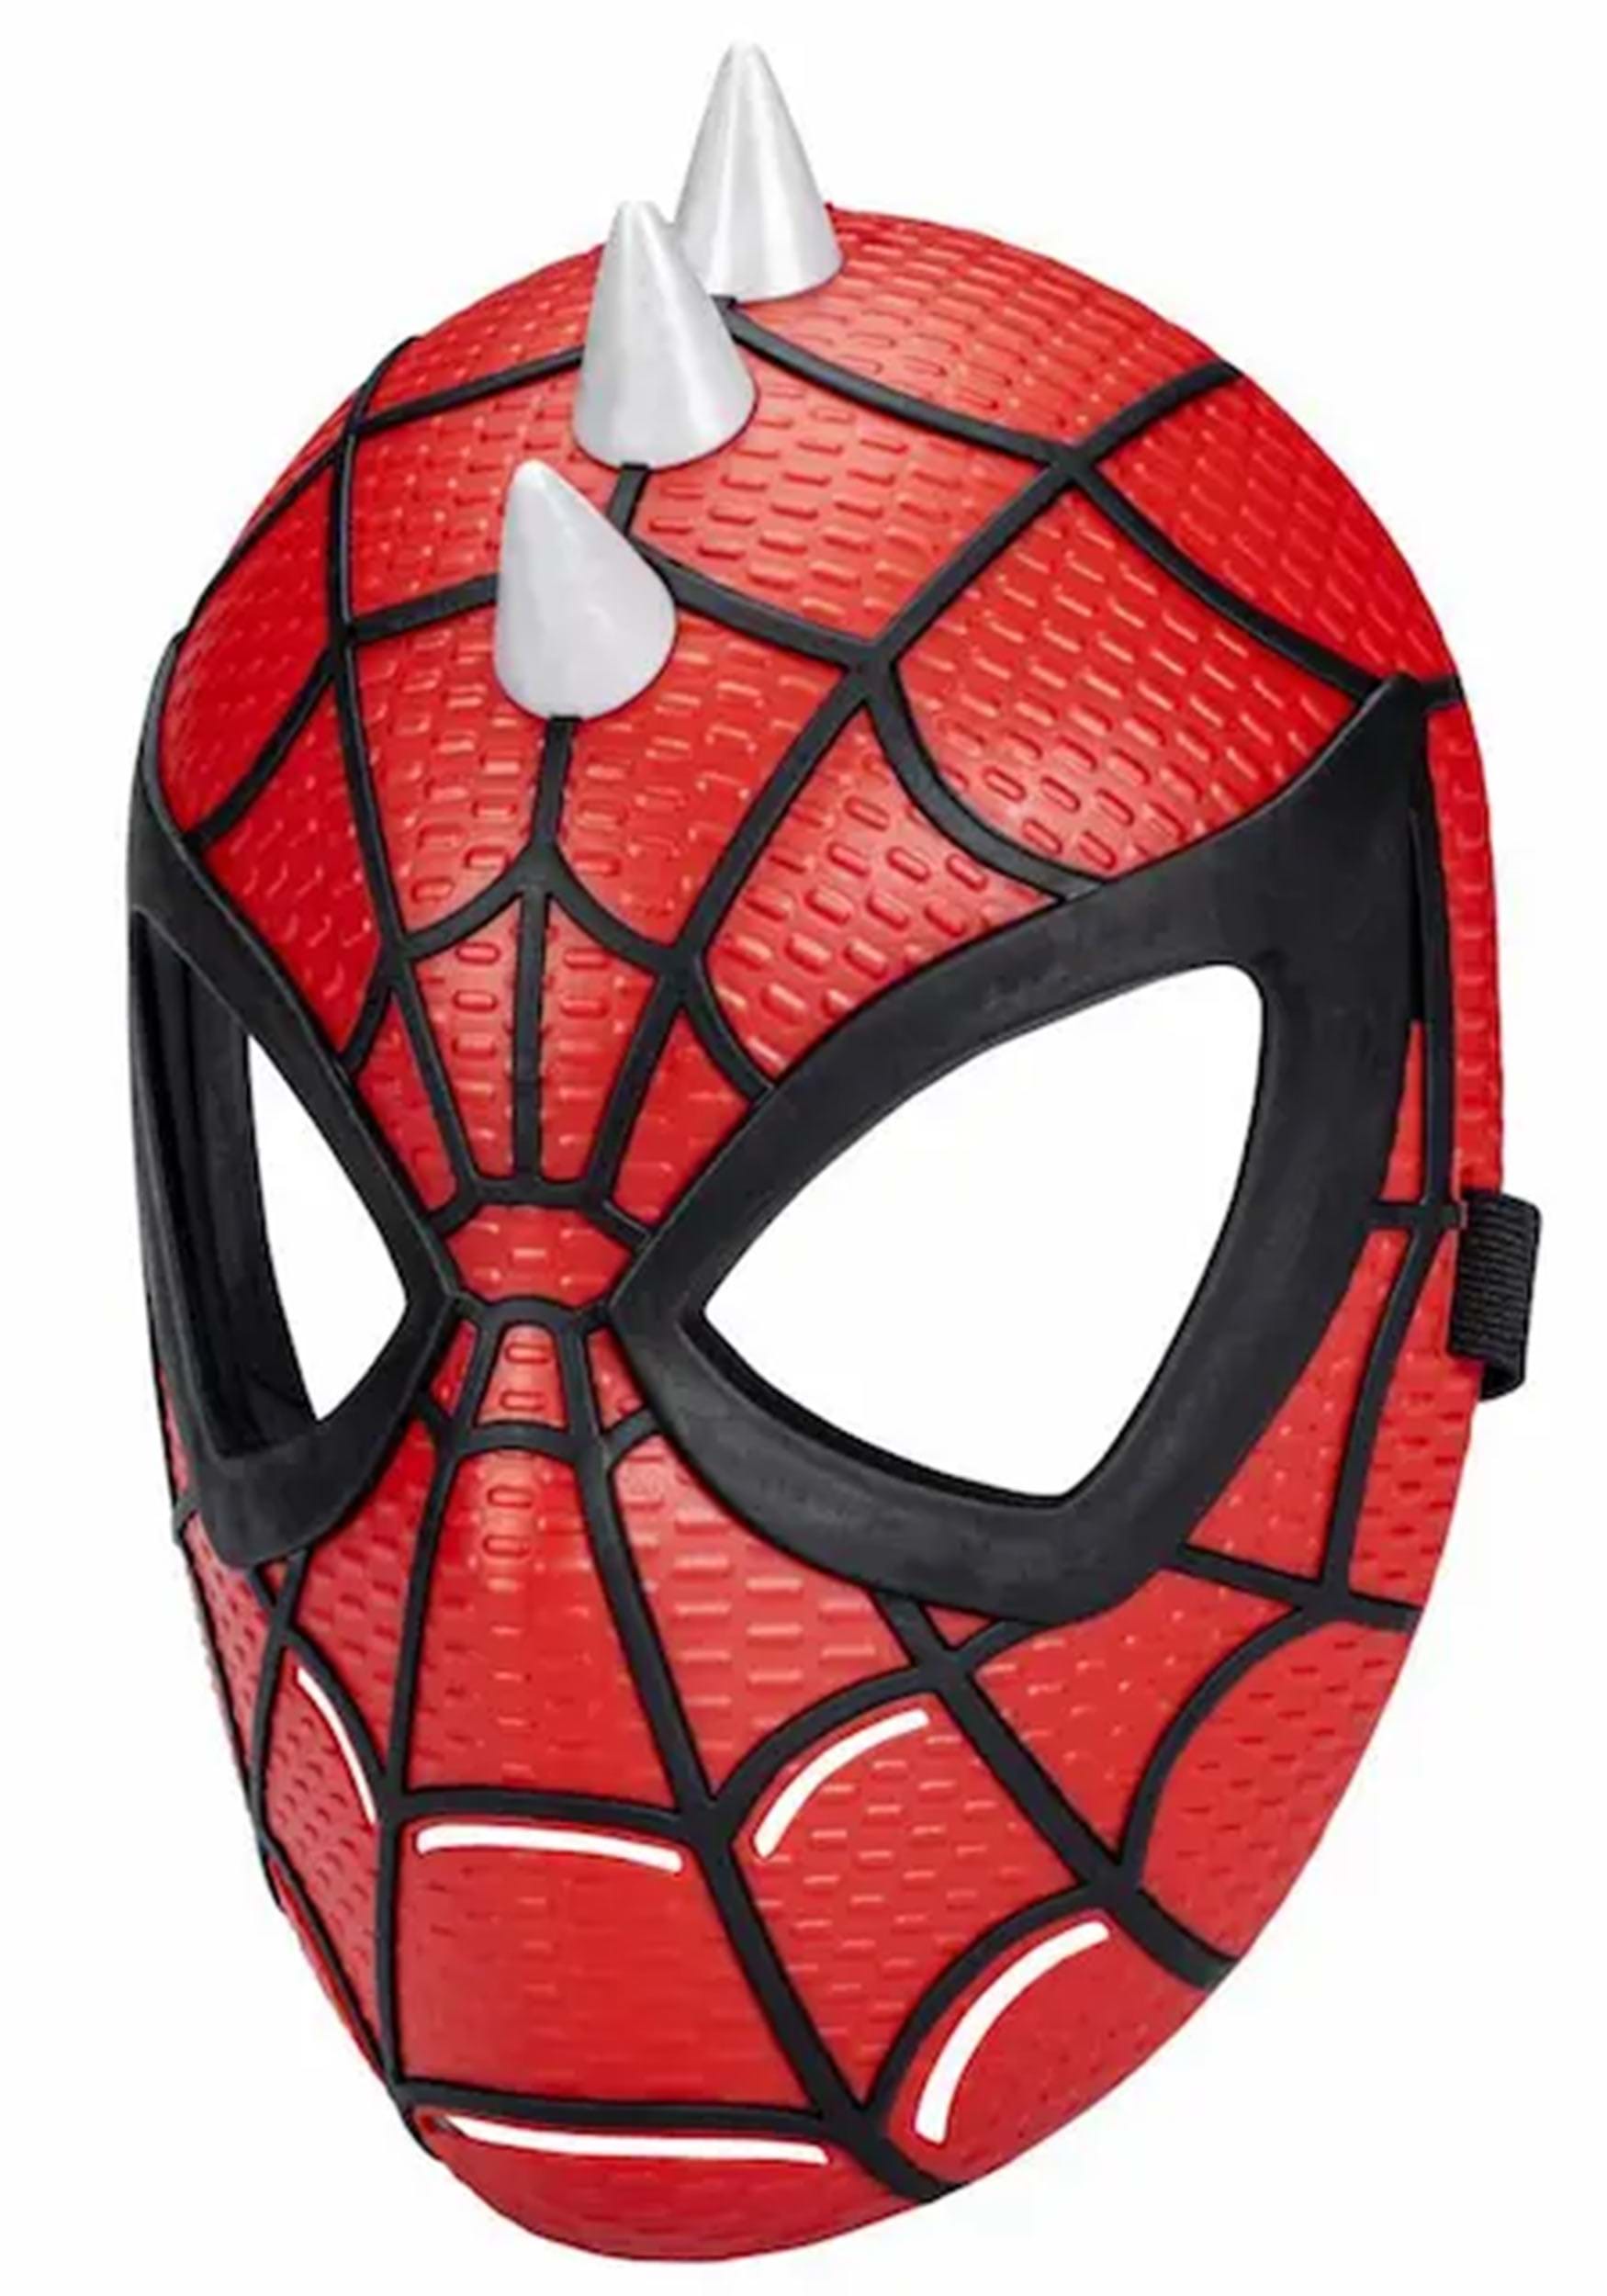 Spider-Man Spider-Punk Mask for Kids